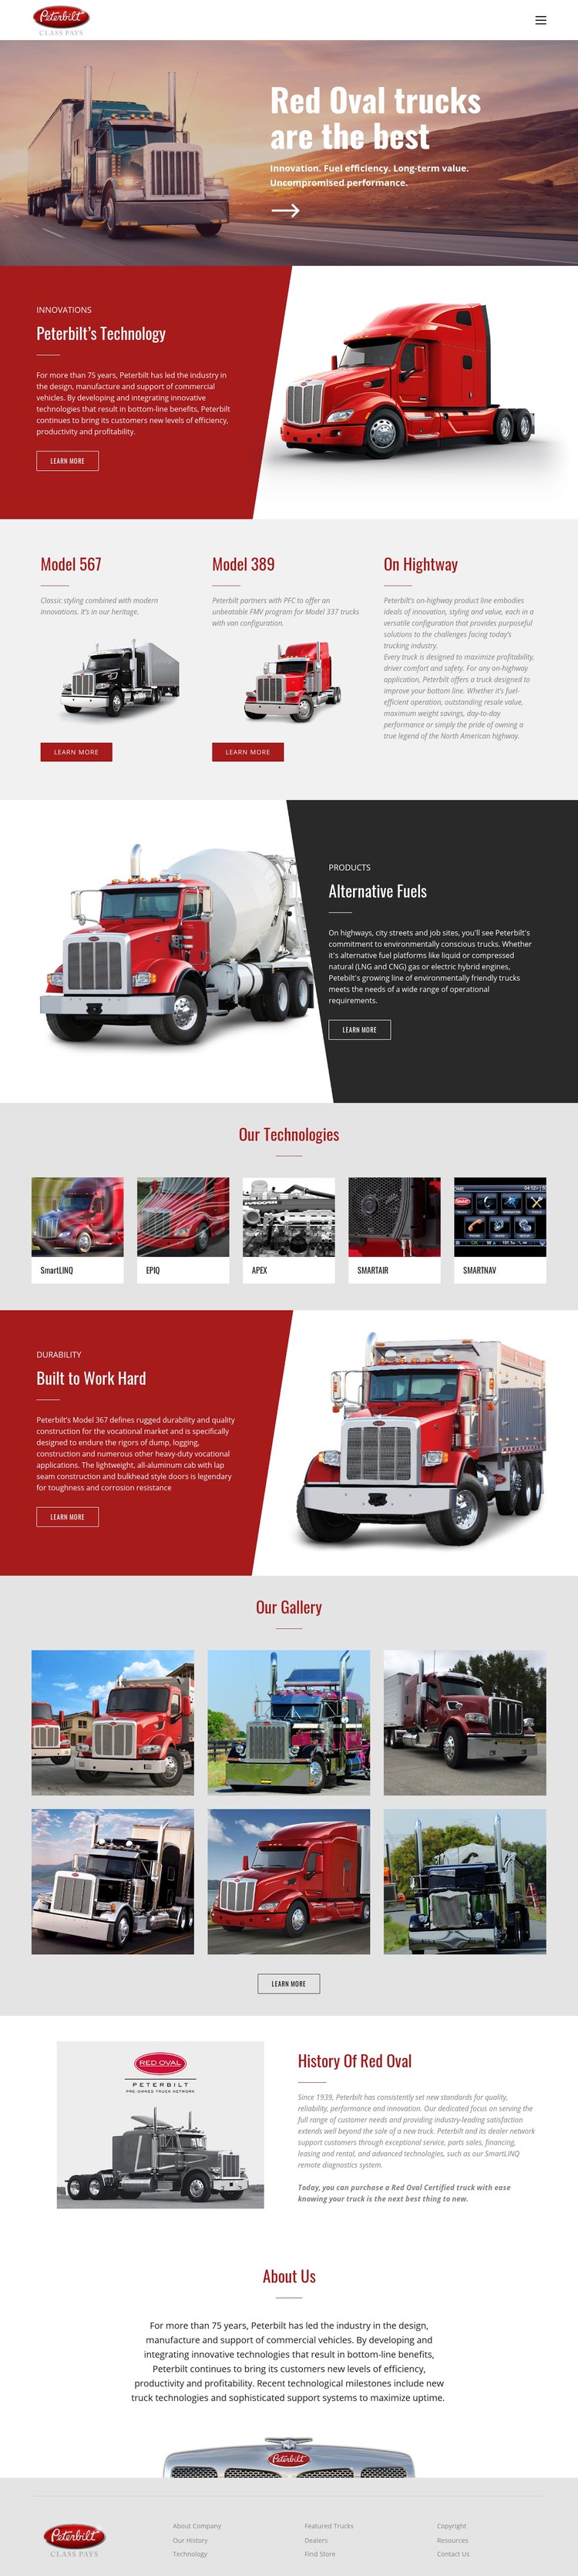 Red oval truck transportaion Webflow Template Alternative